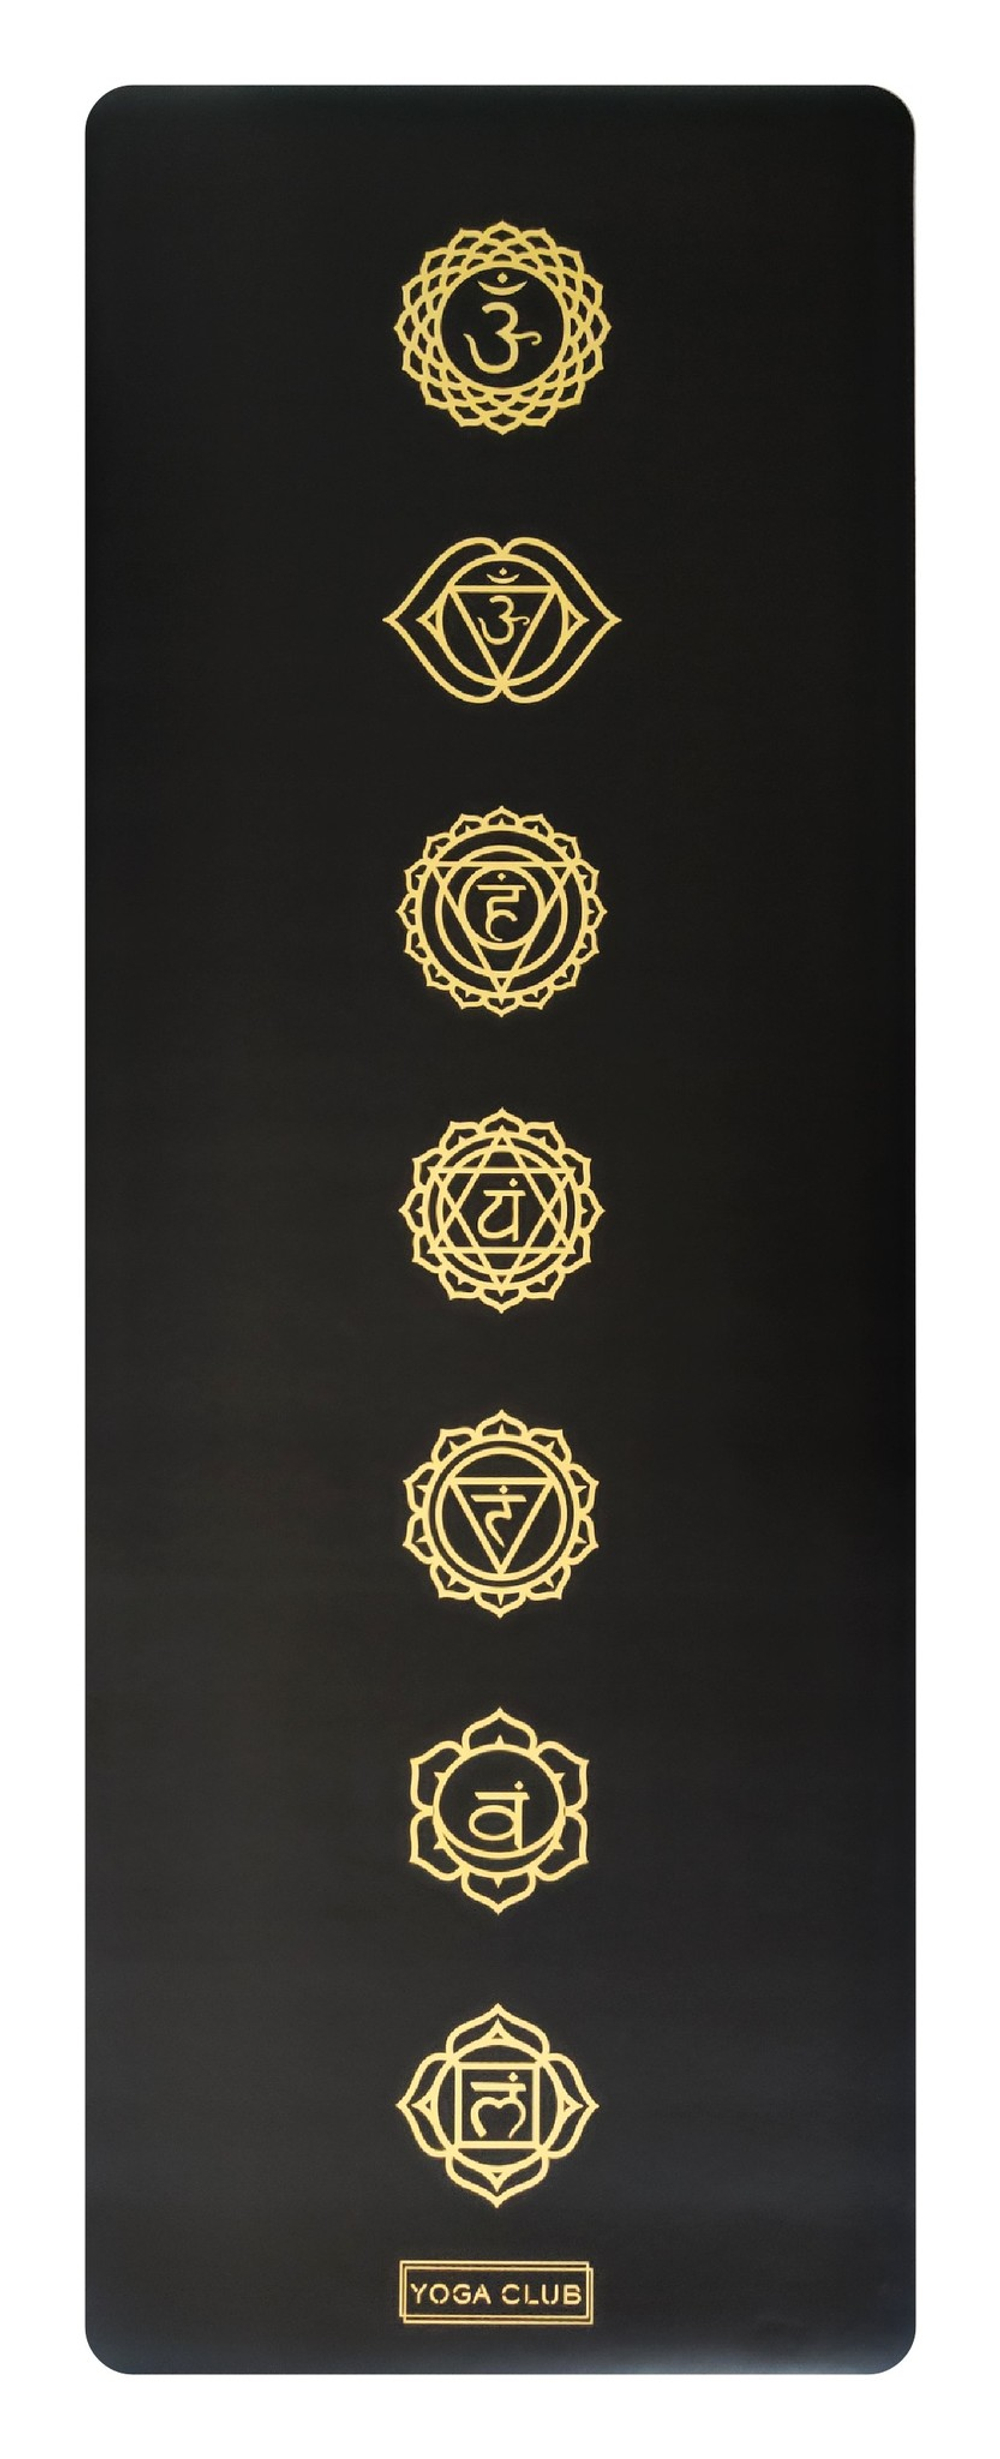 Каучуковый йога коврик Chakras Gold Pro 185*68*0,45 см